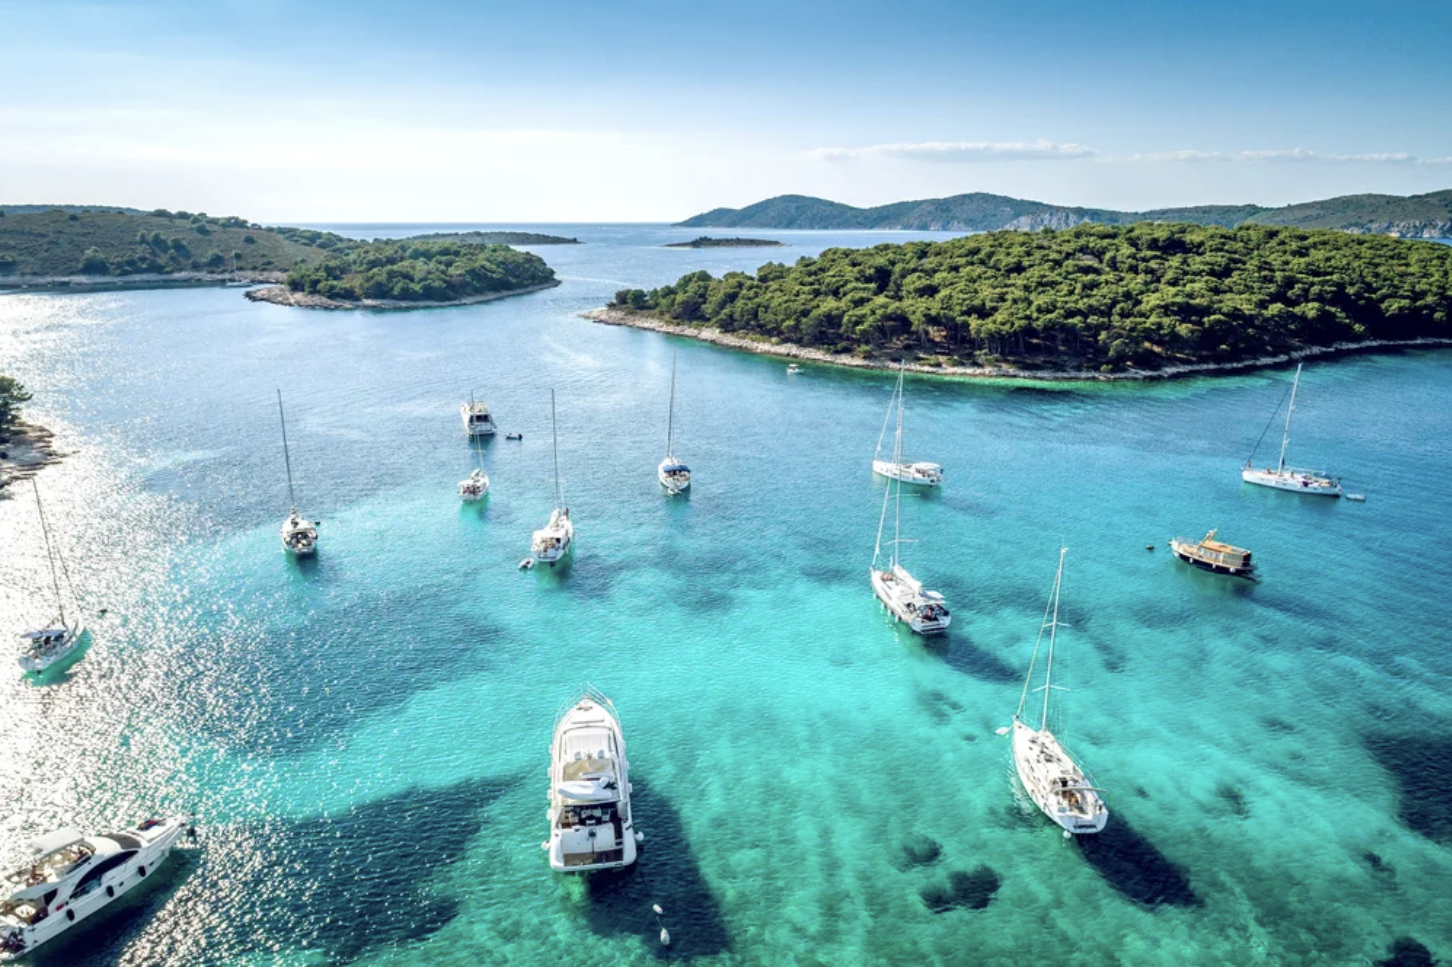 Croatian Islands